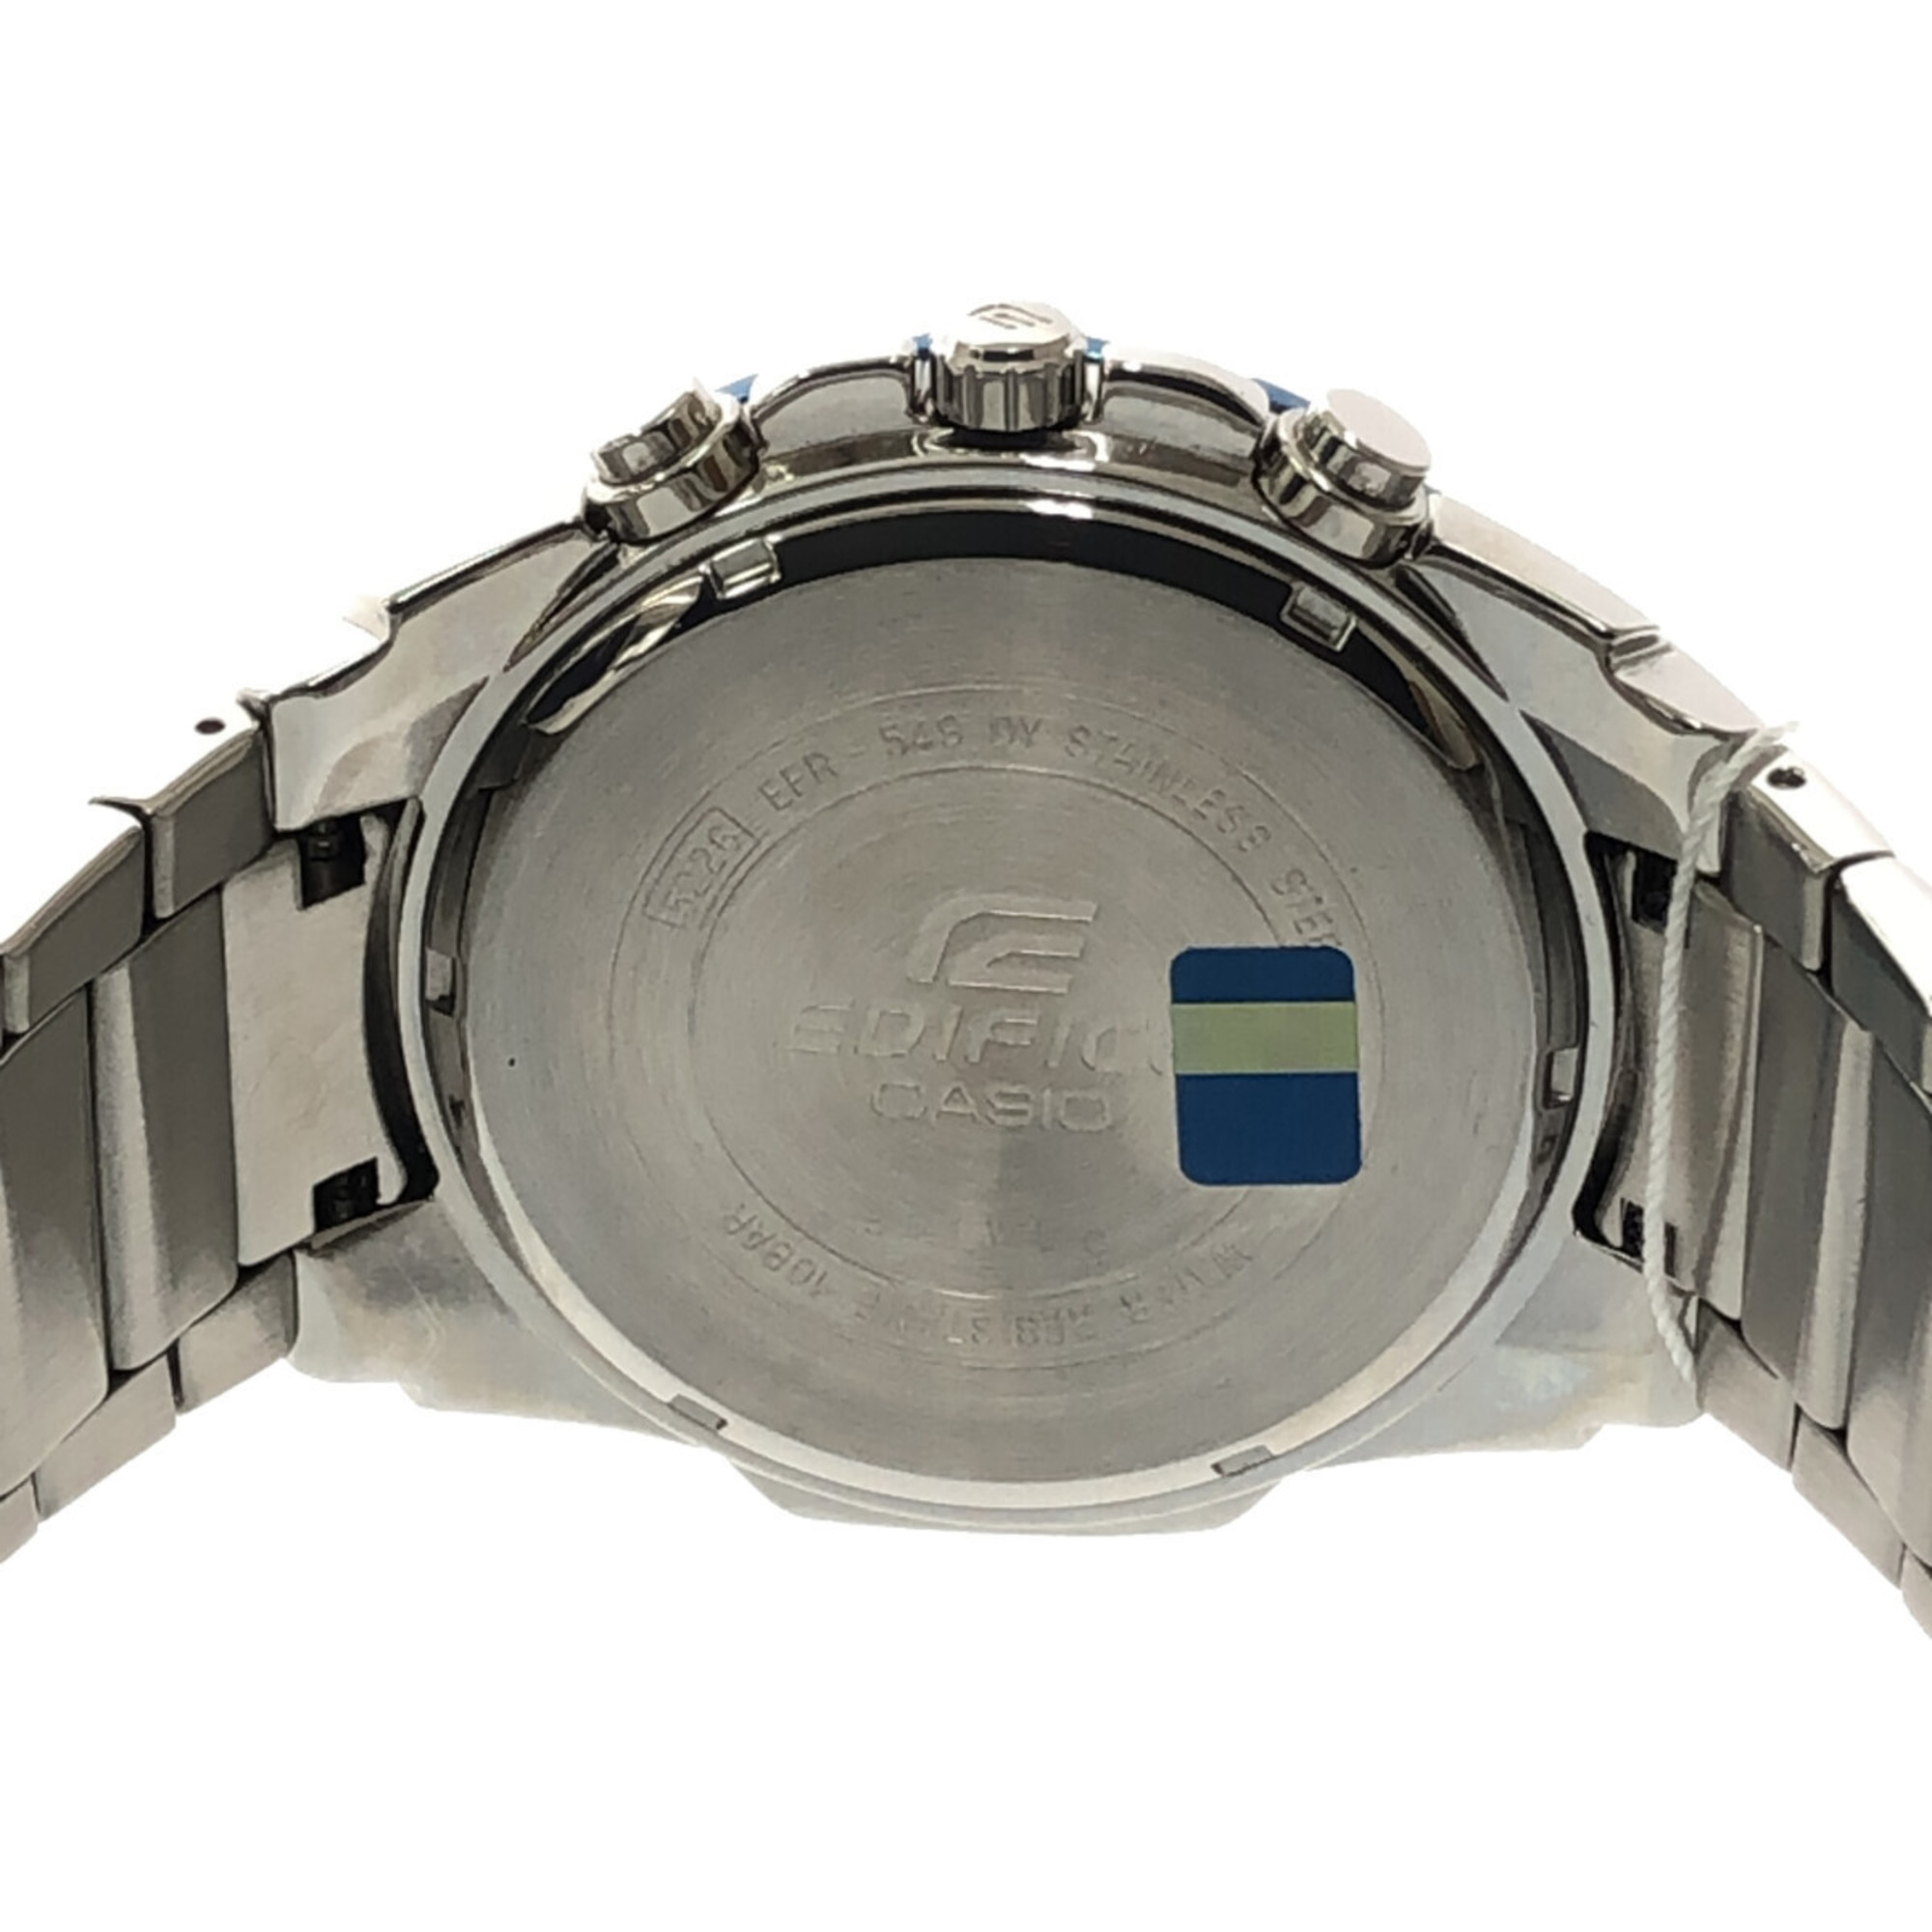 CASIO EDFICE Casio Edifice EFR-549D-1A2VUEF Quartz Watch Men's Instruction Manual Included WATCH Mikunigaoka Store ITOVCWCYS2GO RM3796M